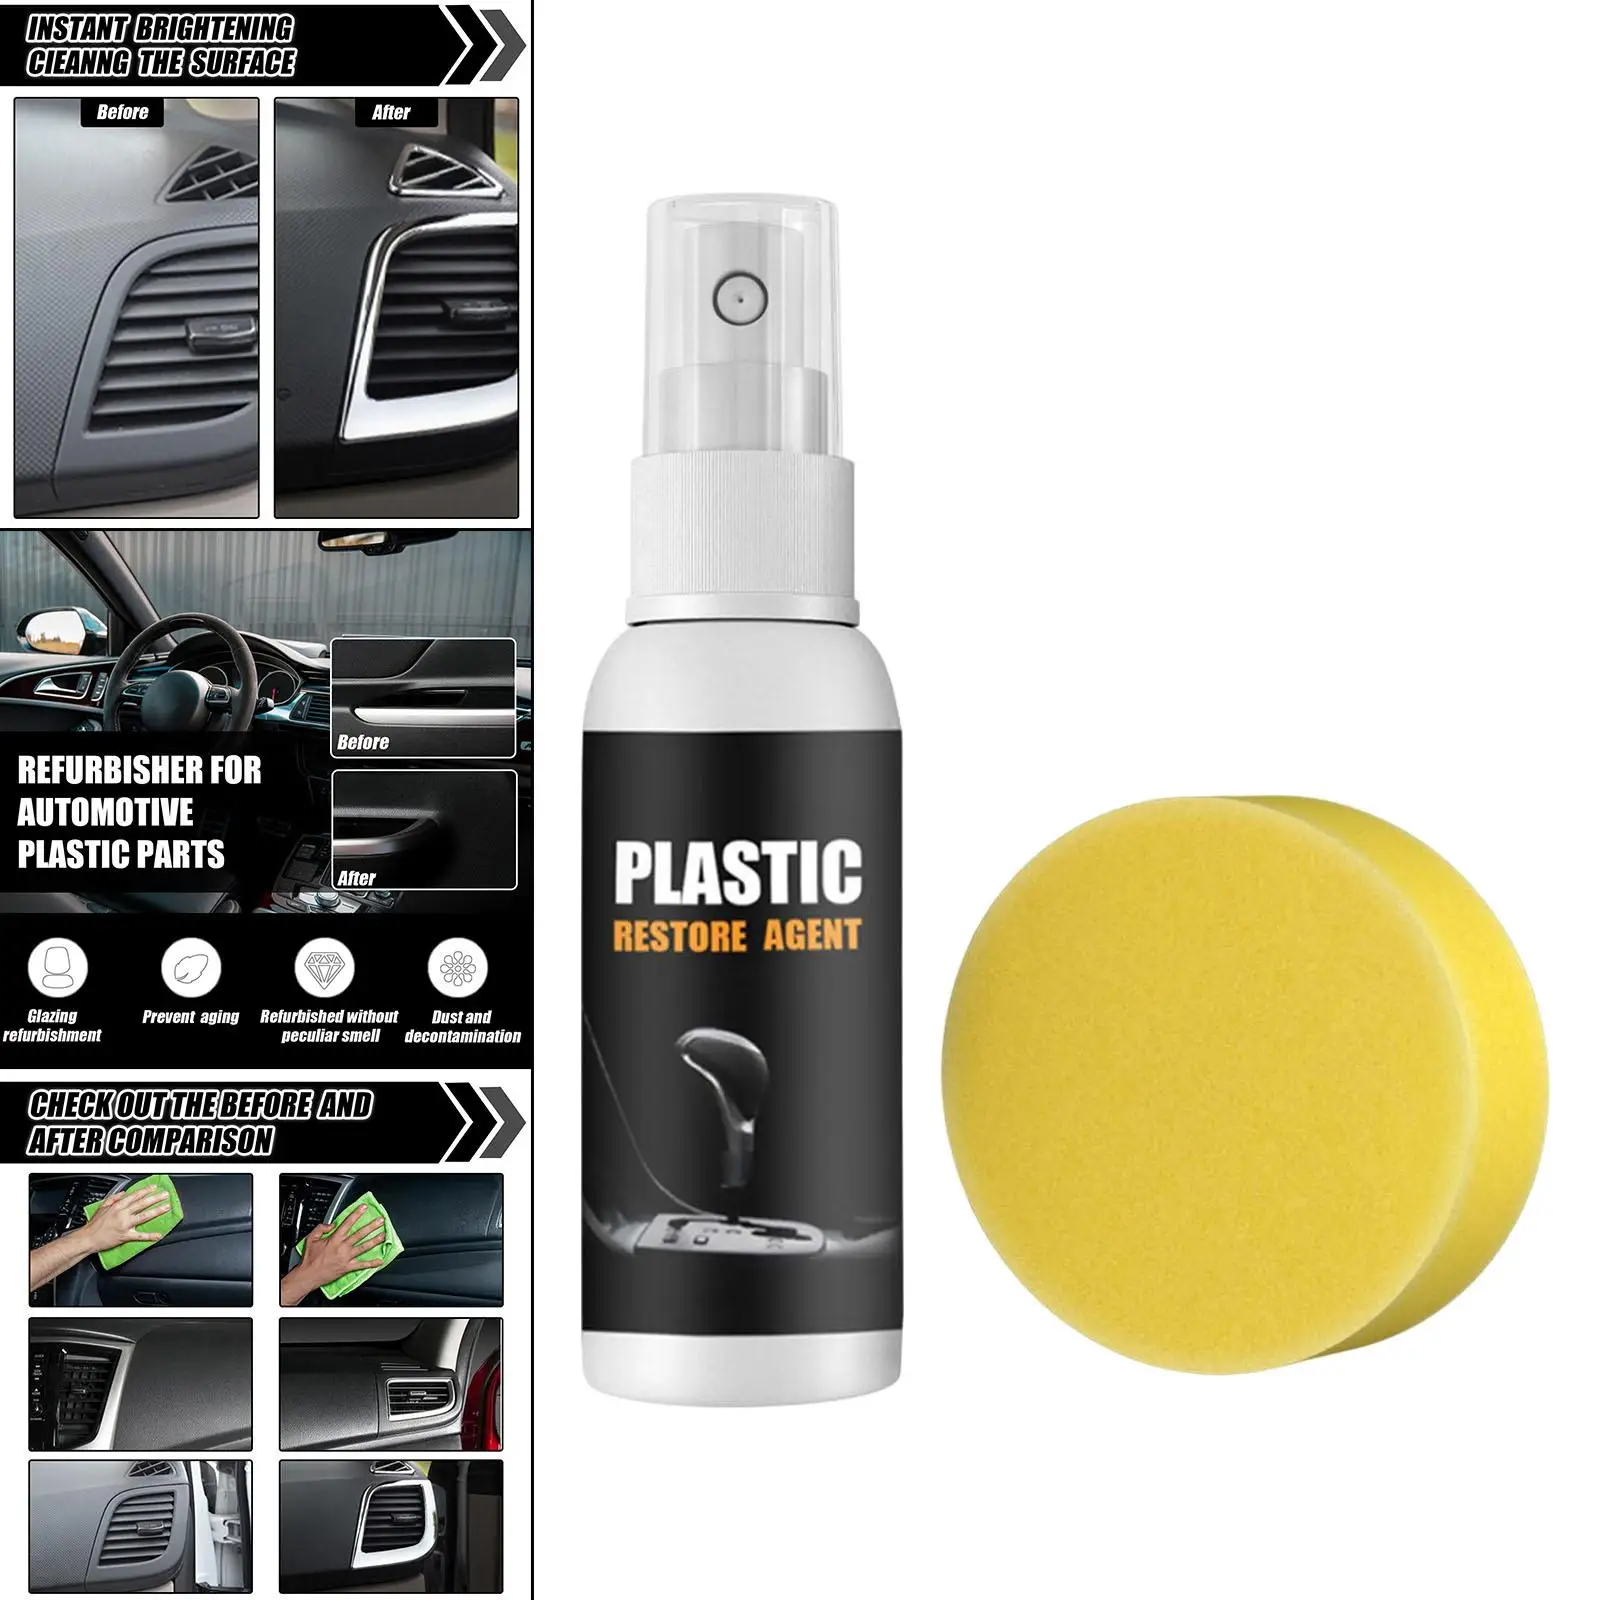 Multi Functional Car Plastic Restorer Refurbishment Plastic Parts Refreshing Agent for Automotive Interior Exterior Leather